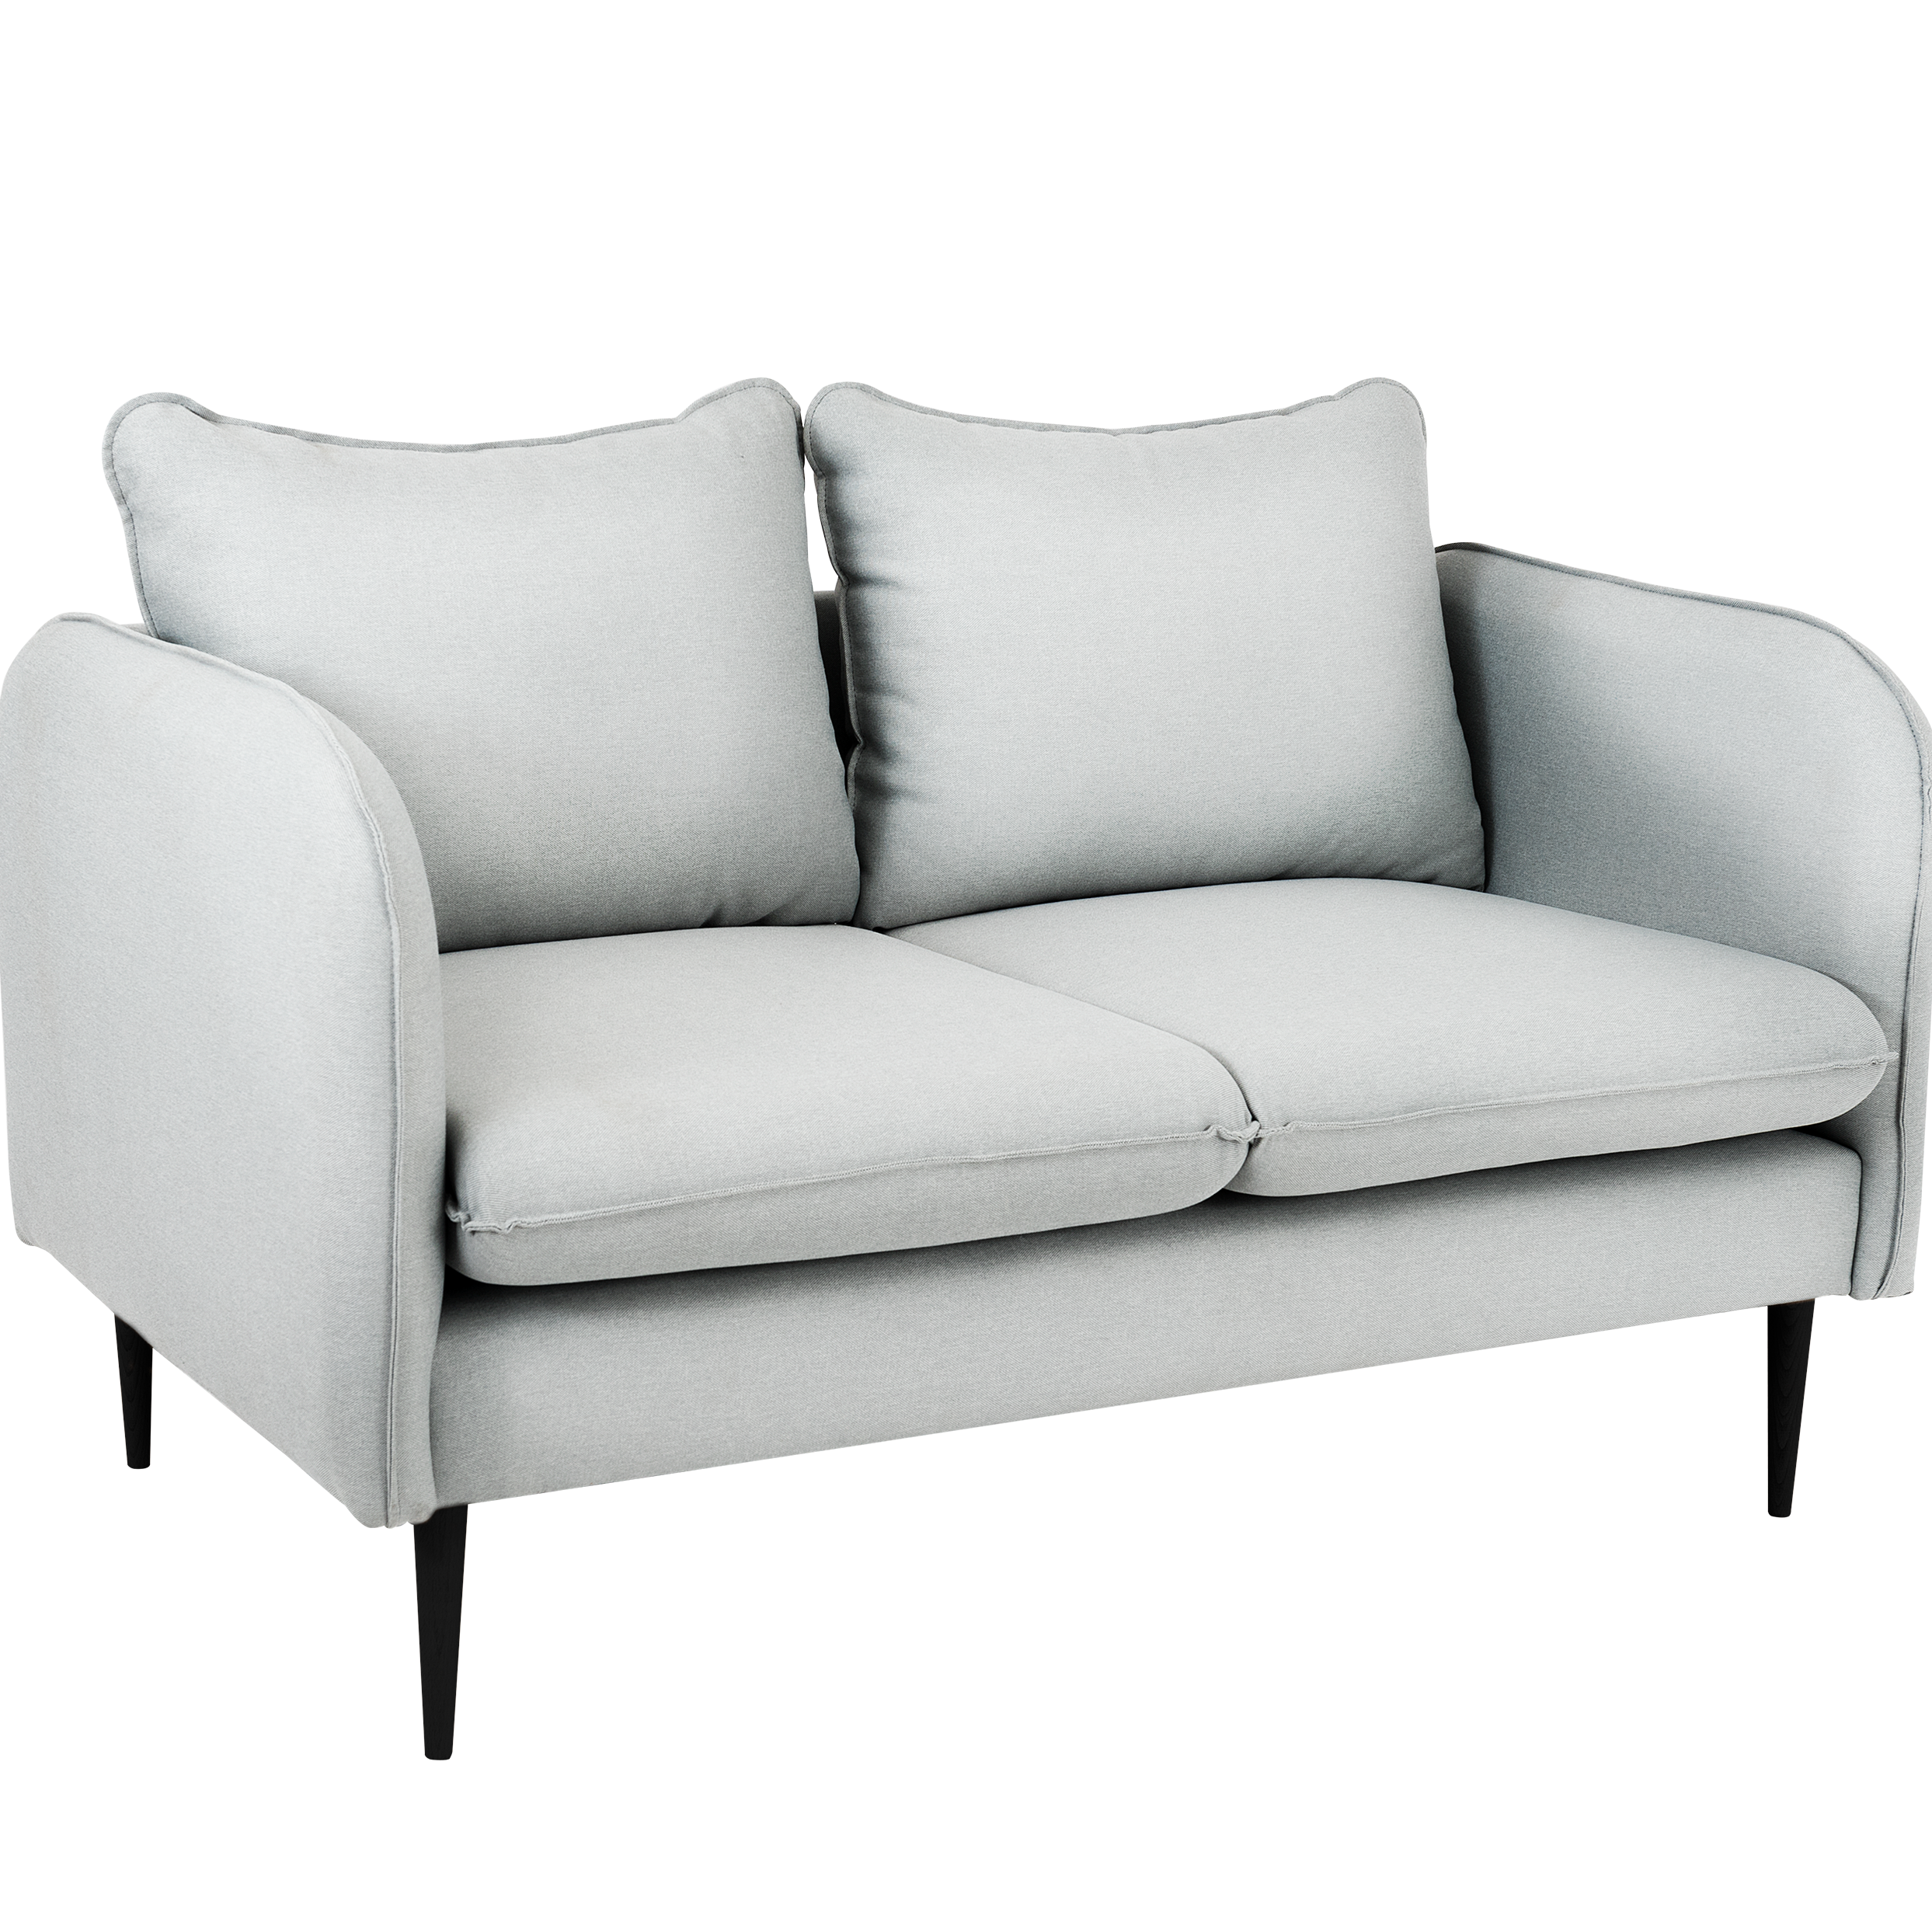 POSH BLACK Sofa 2 Seaters upholstery colour grey